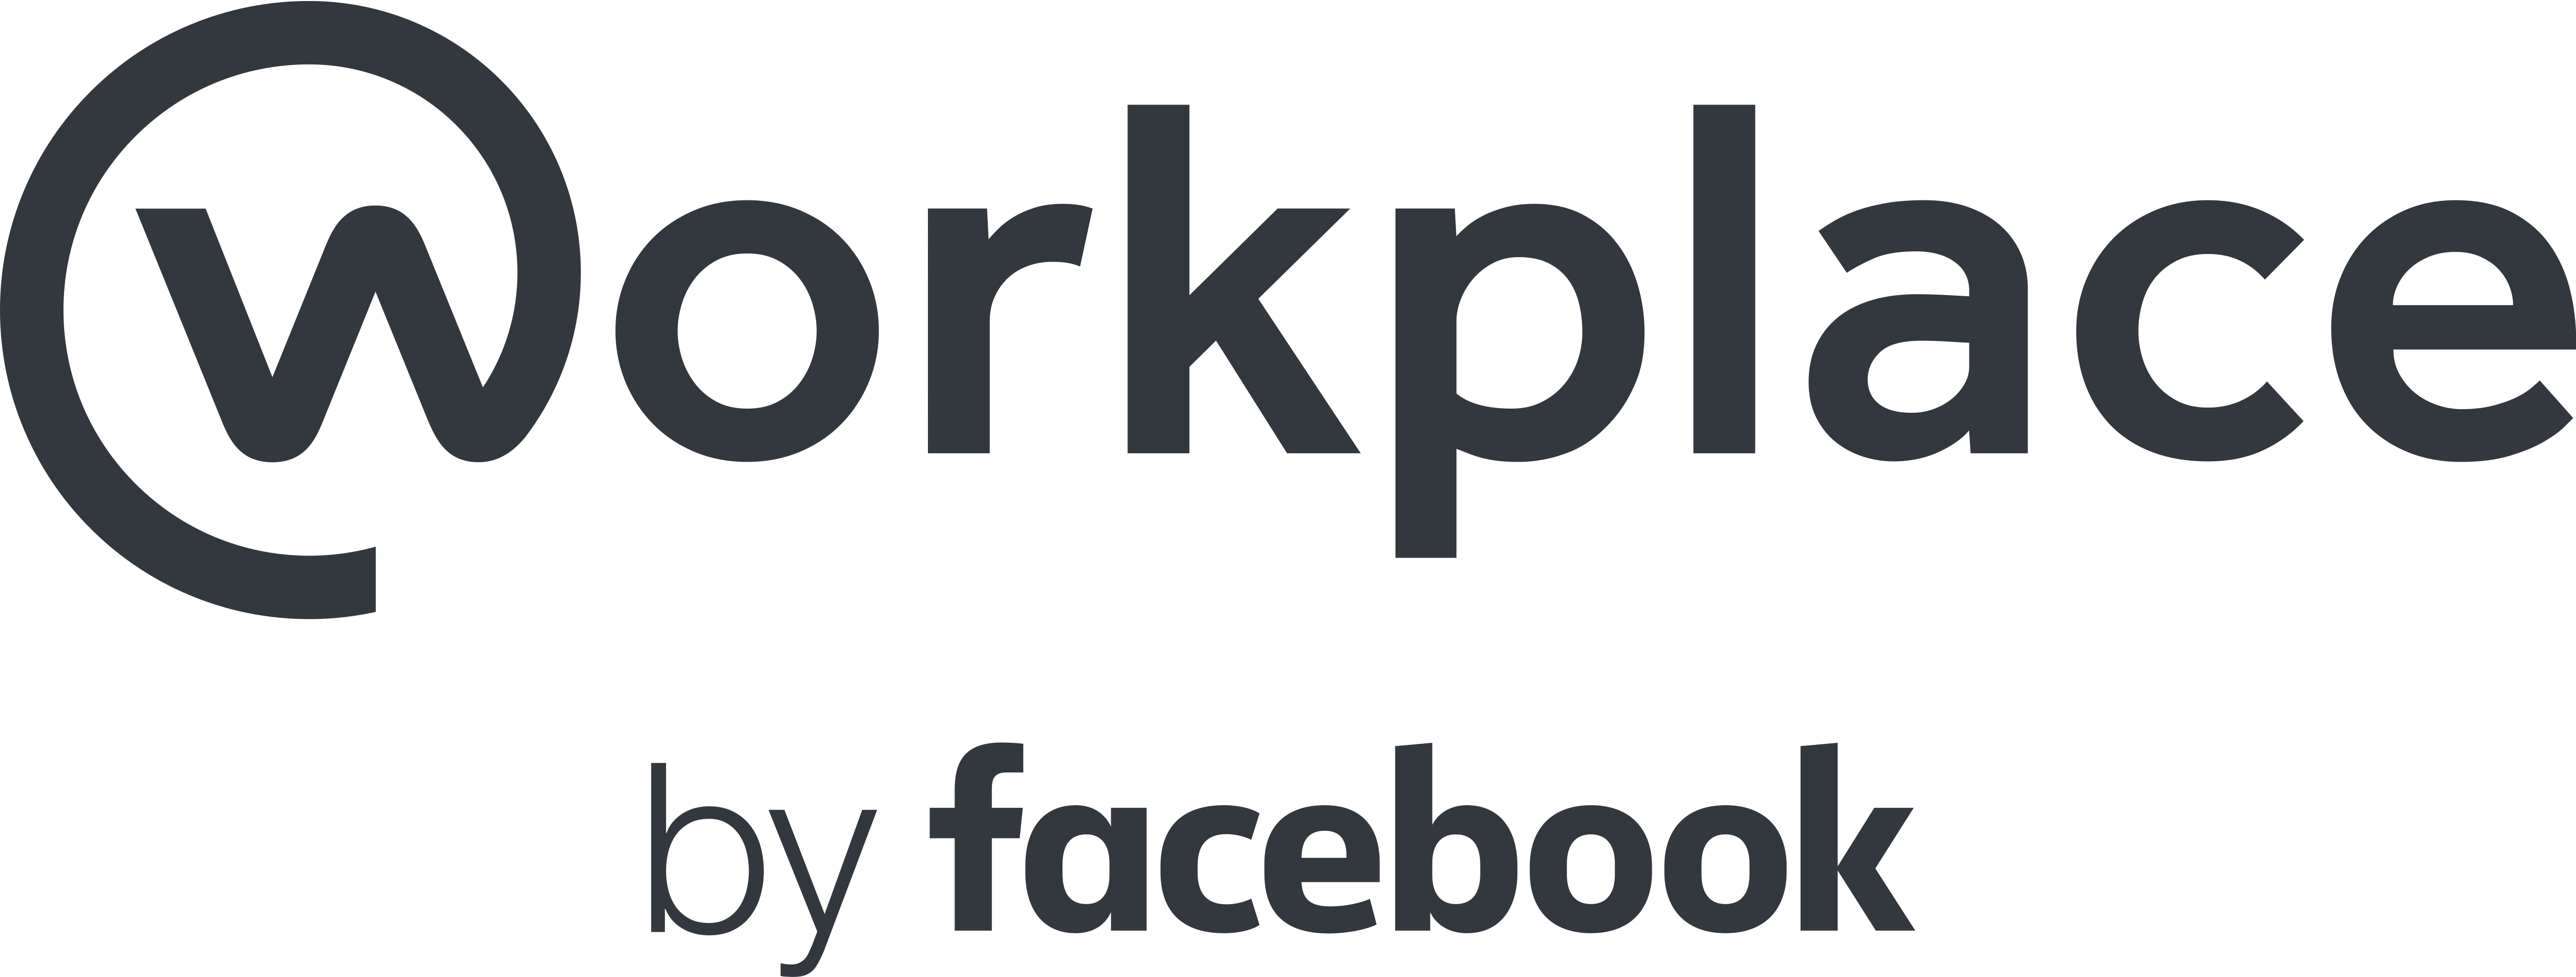 Workplace Logo - logo-facebook-workplace-copy